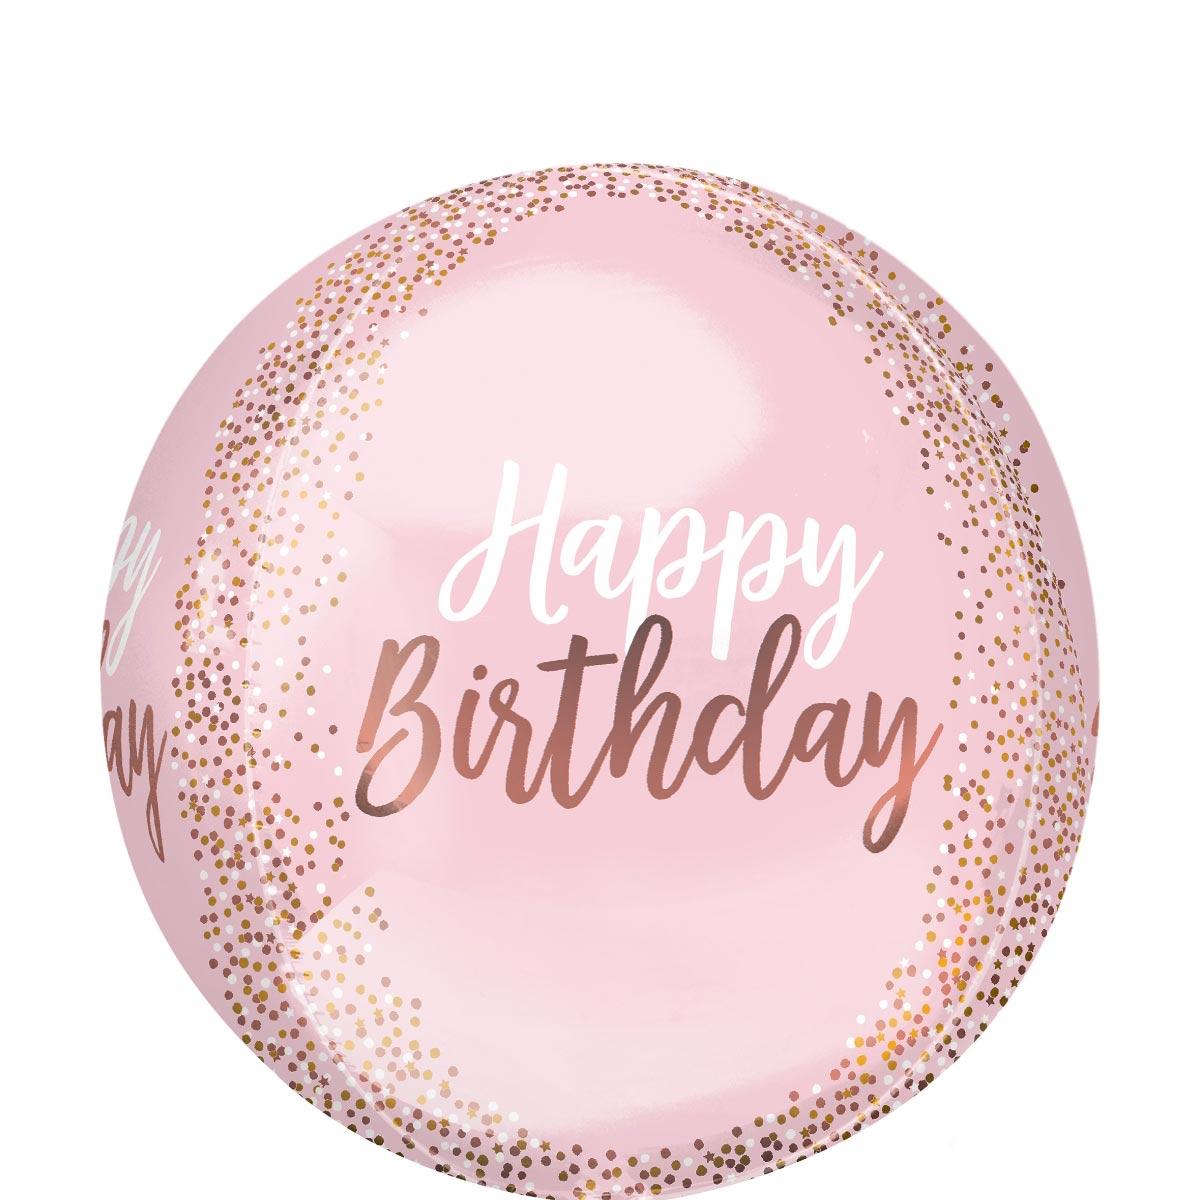 Blush Birthday Orbz Balloon 38x40cm Balloons & Streamers - Party Centre